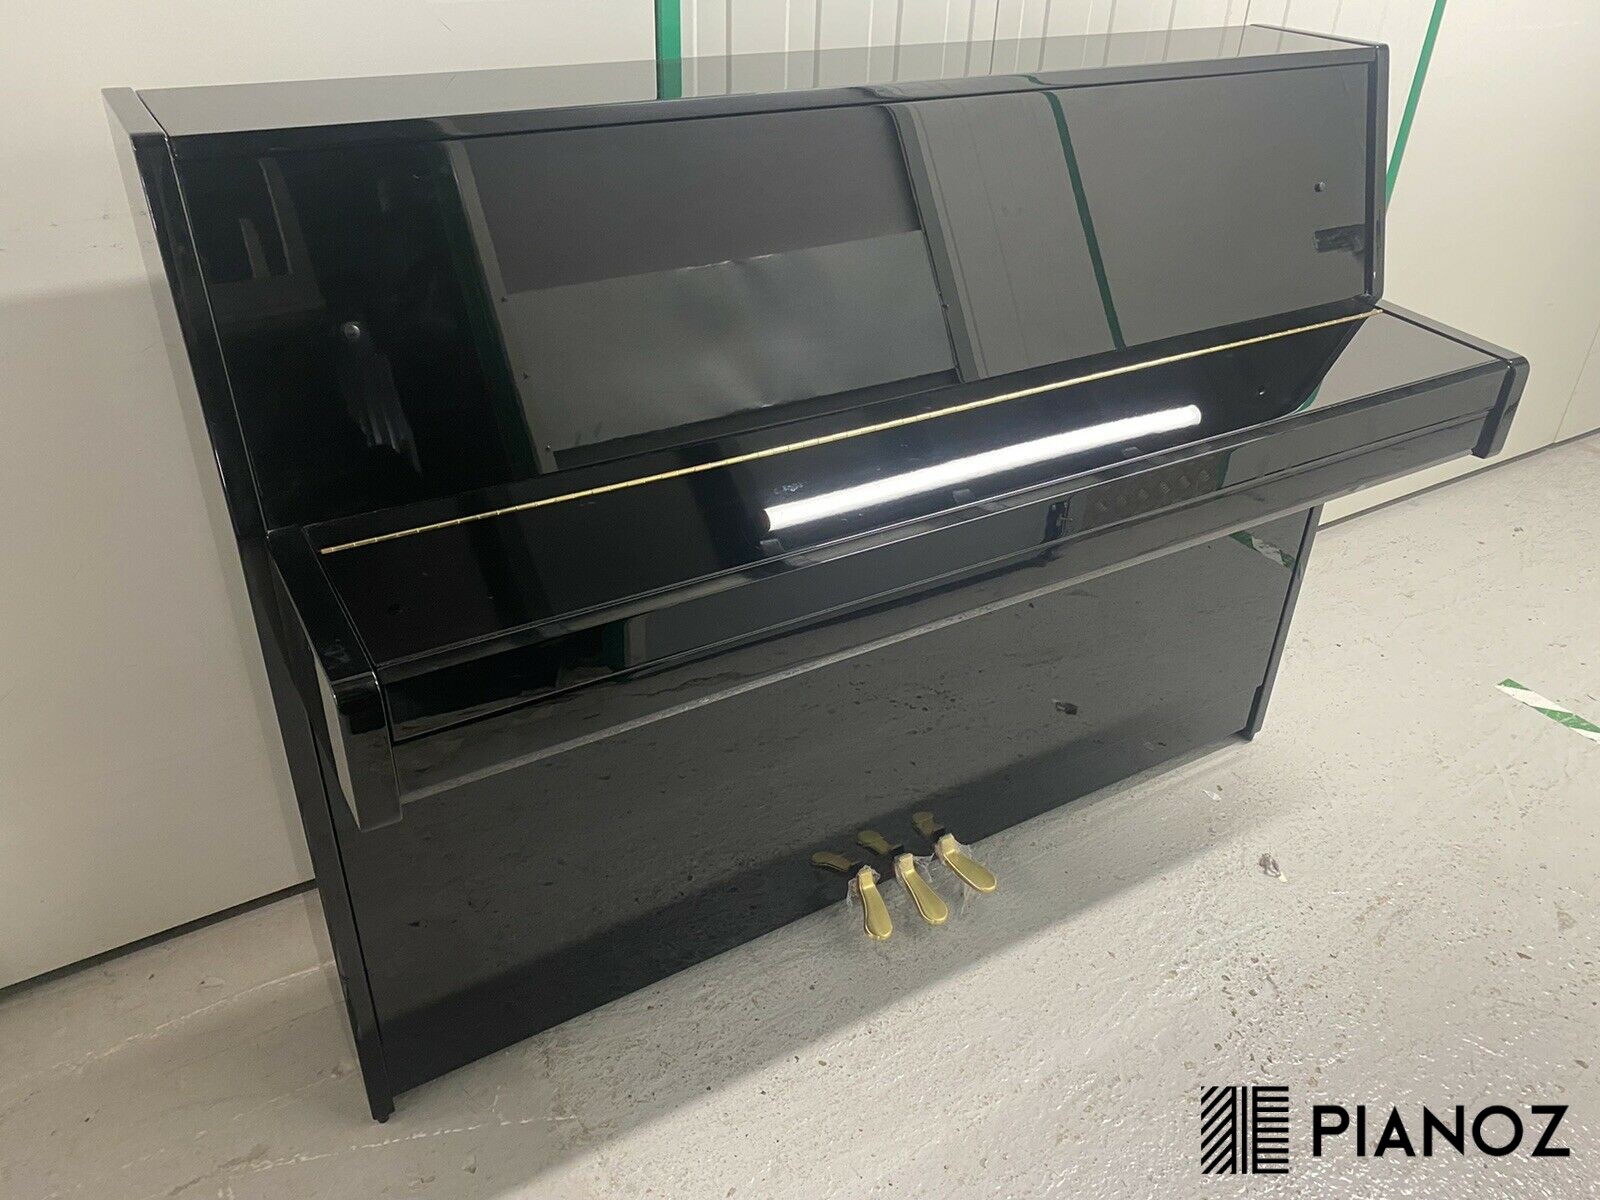 Yamaha B1 PE Upright Piano piano for sale in UK